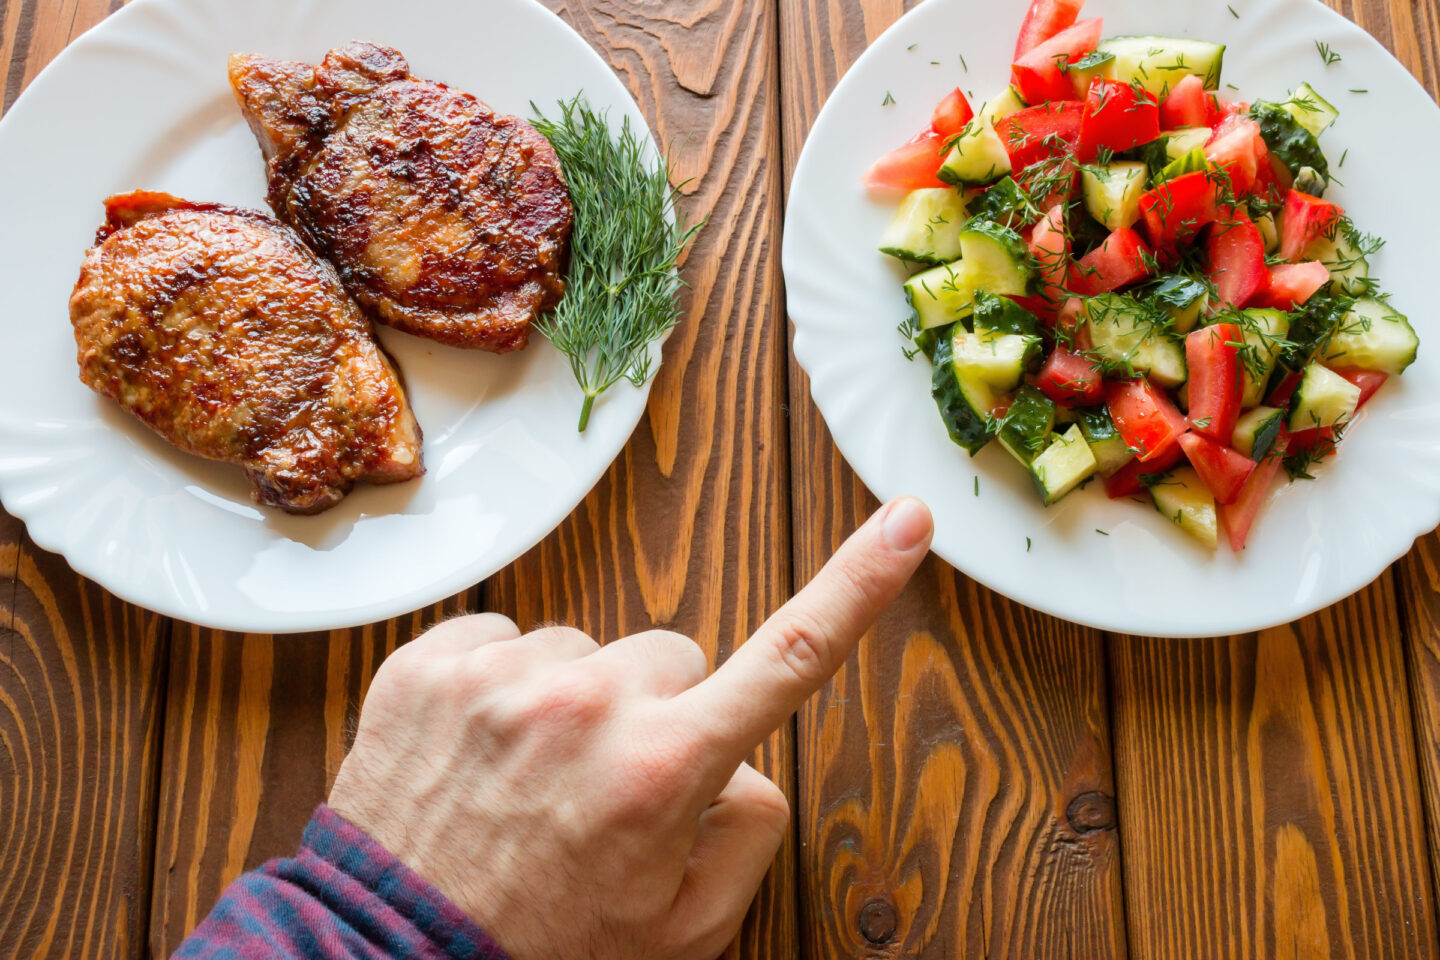 vegetarian chooses salad over meat